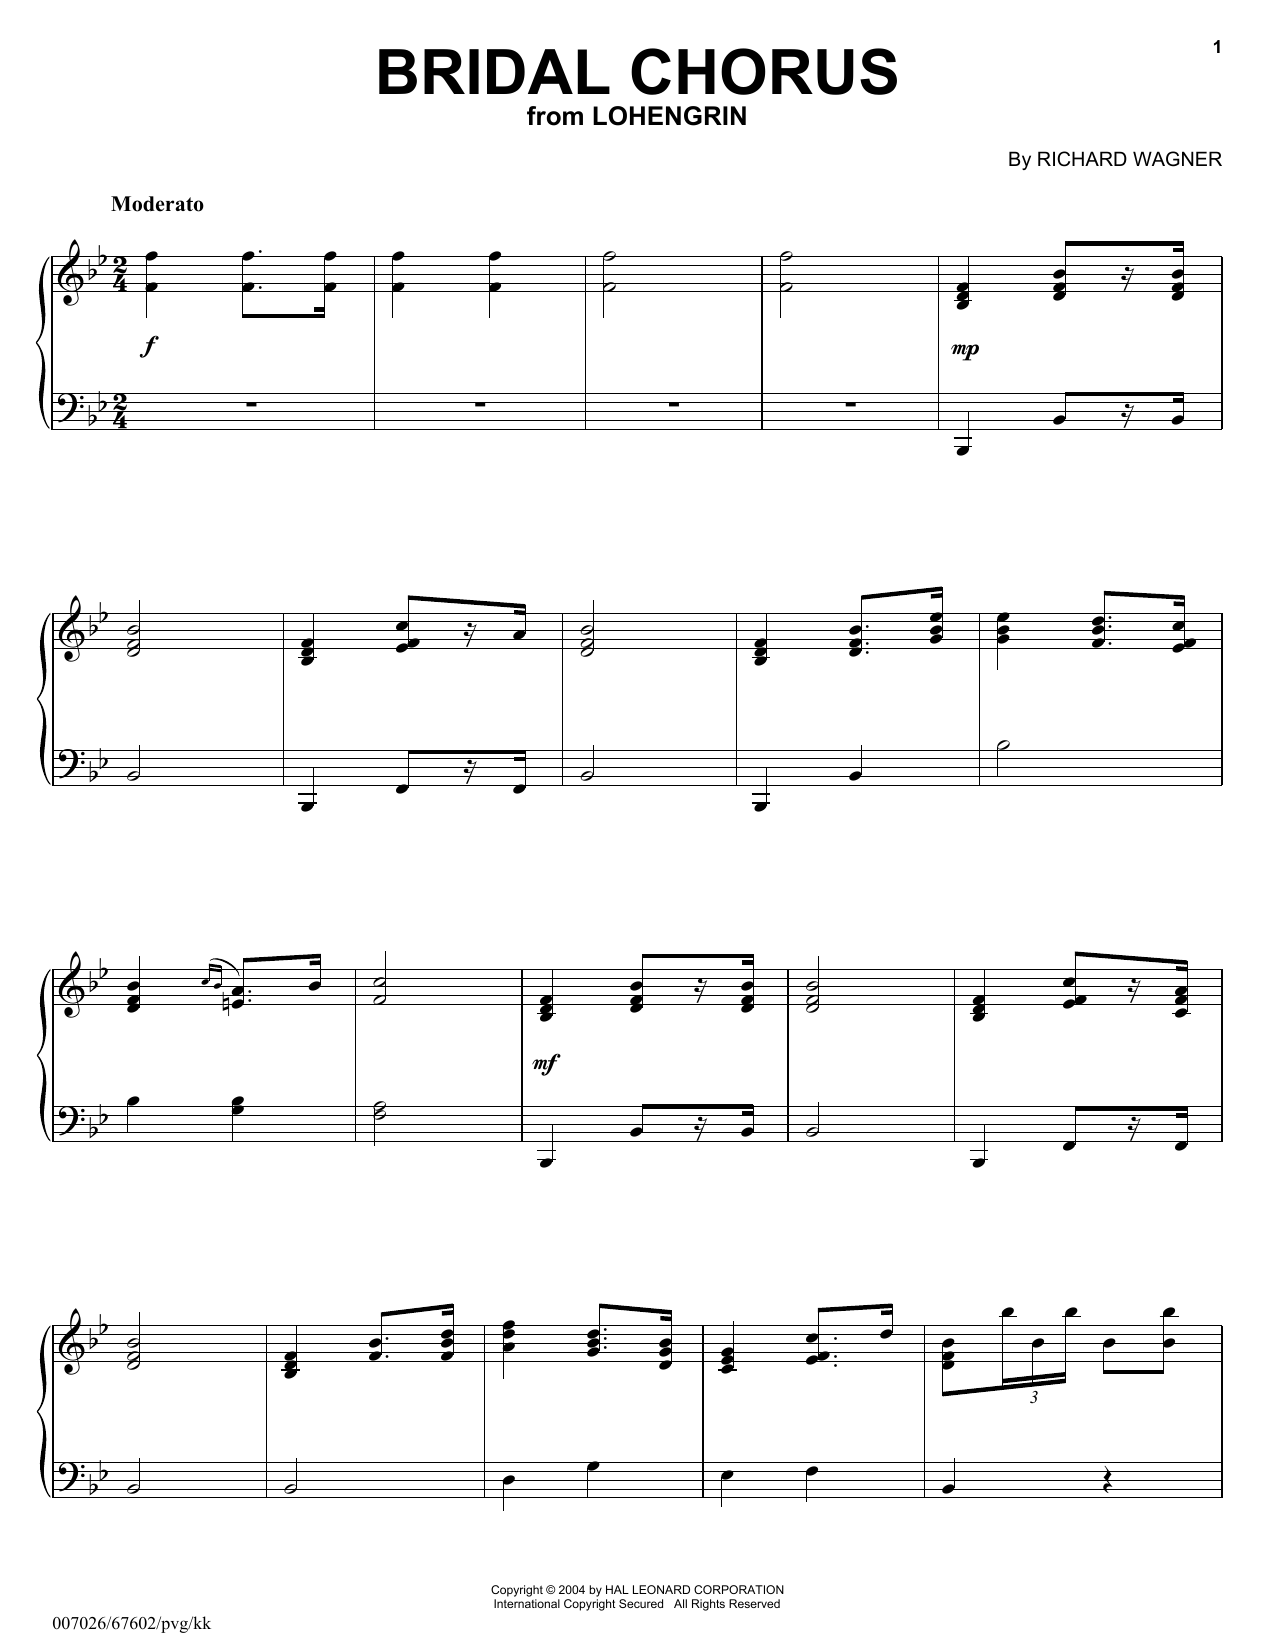 Richard Wagner Bridal Chorus Sheet Music Notes & Chords for Trombone - Download or Print PDF